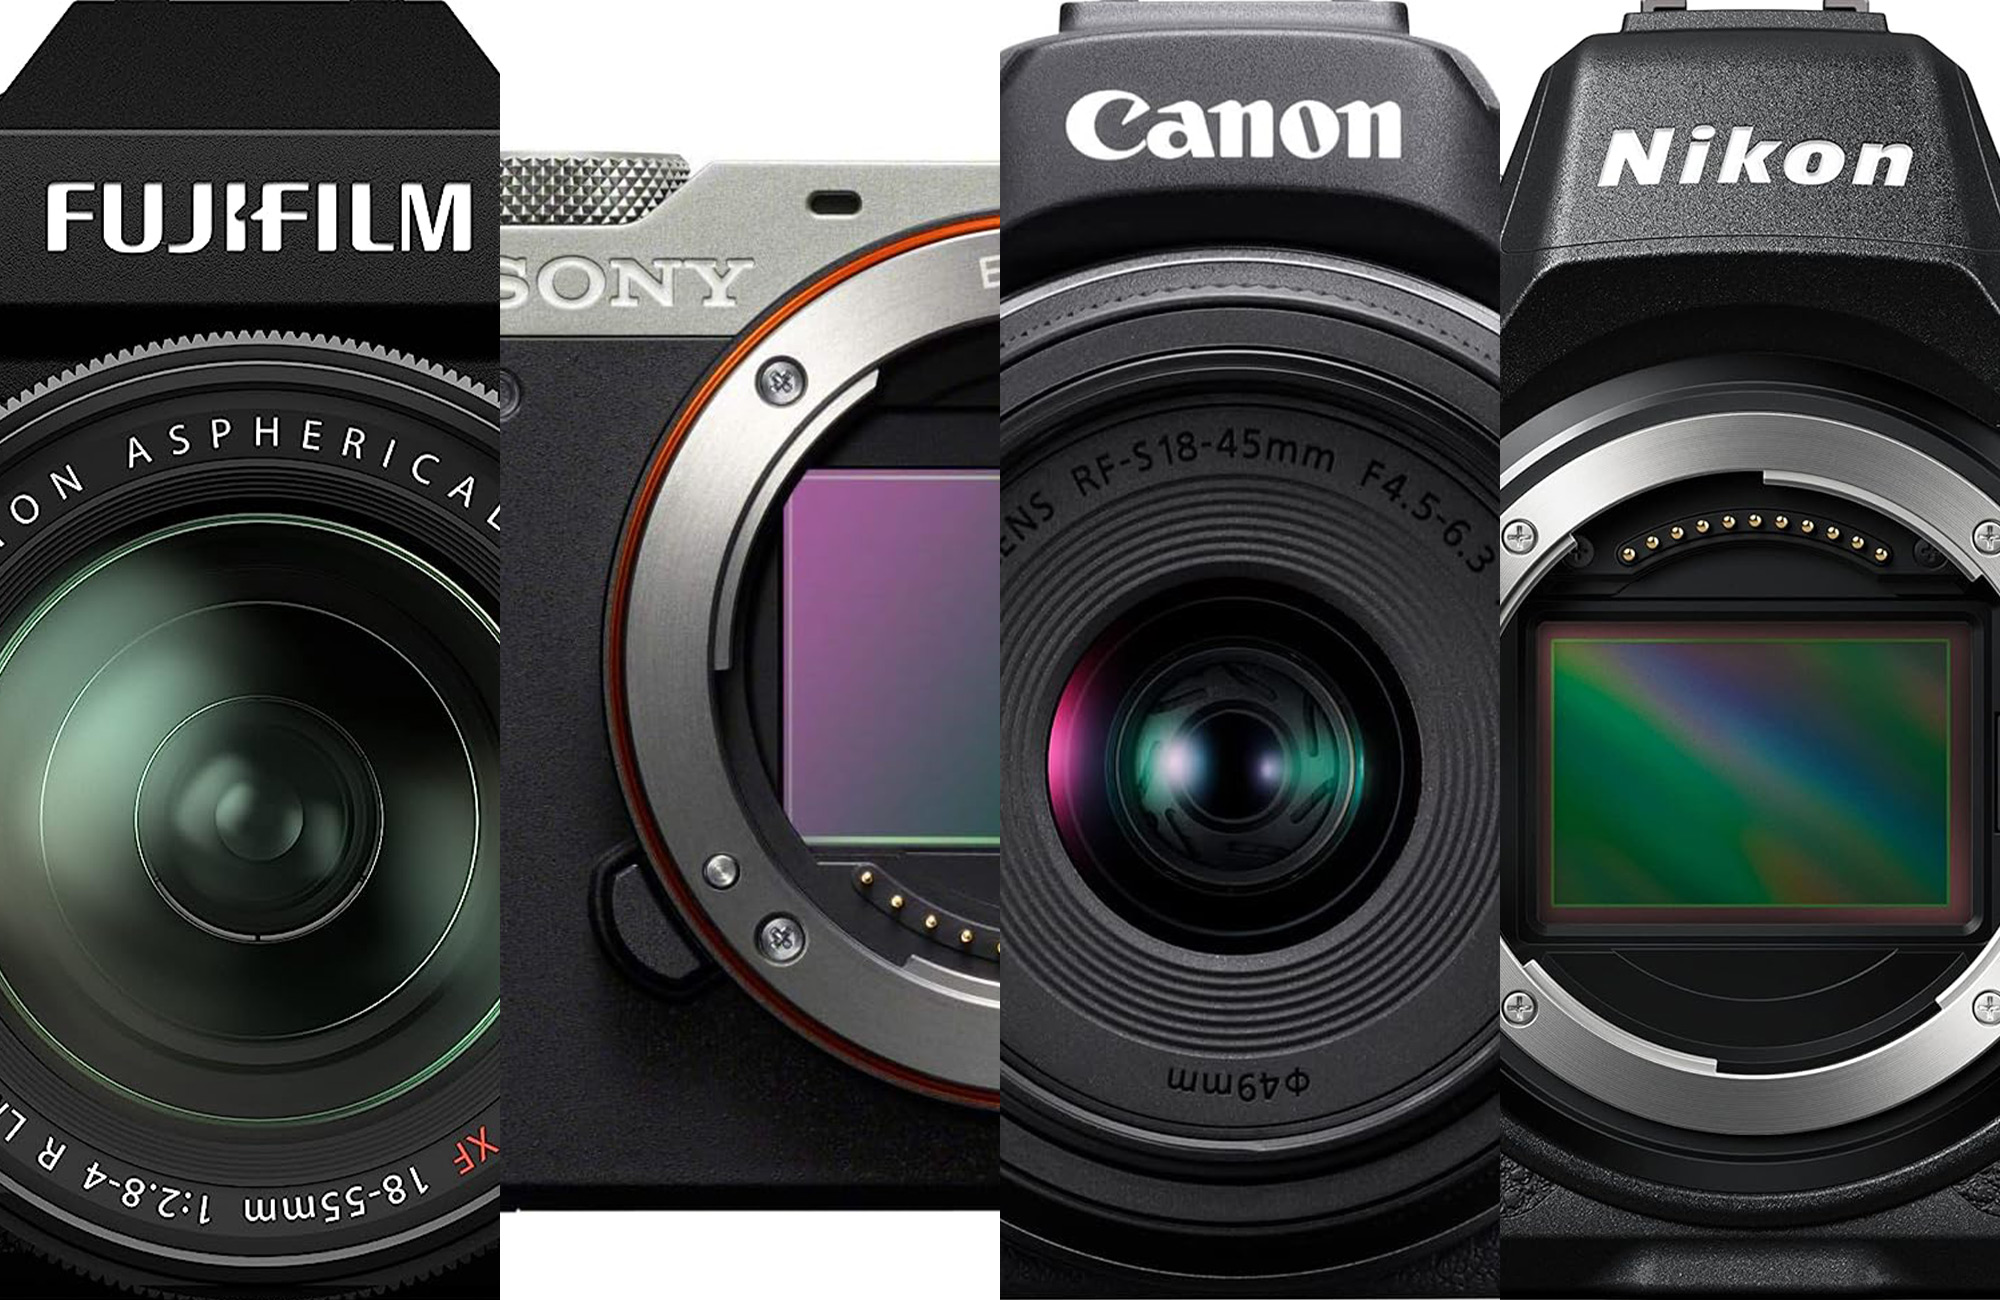 Digital Cameras & Digital Camera Accessories - Best Buy